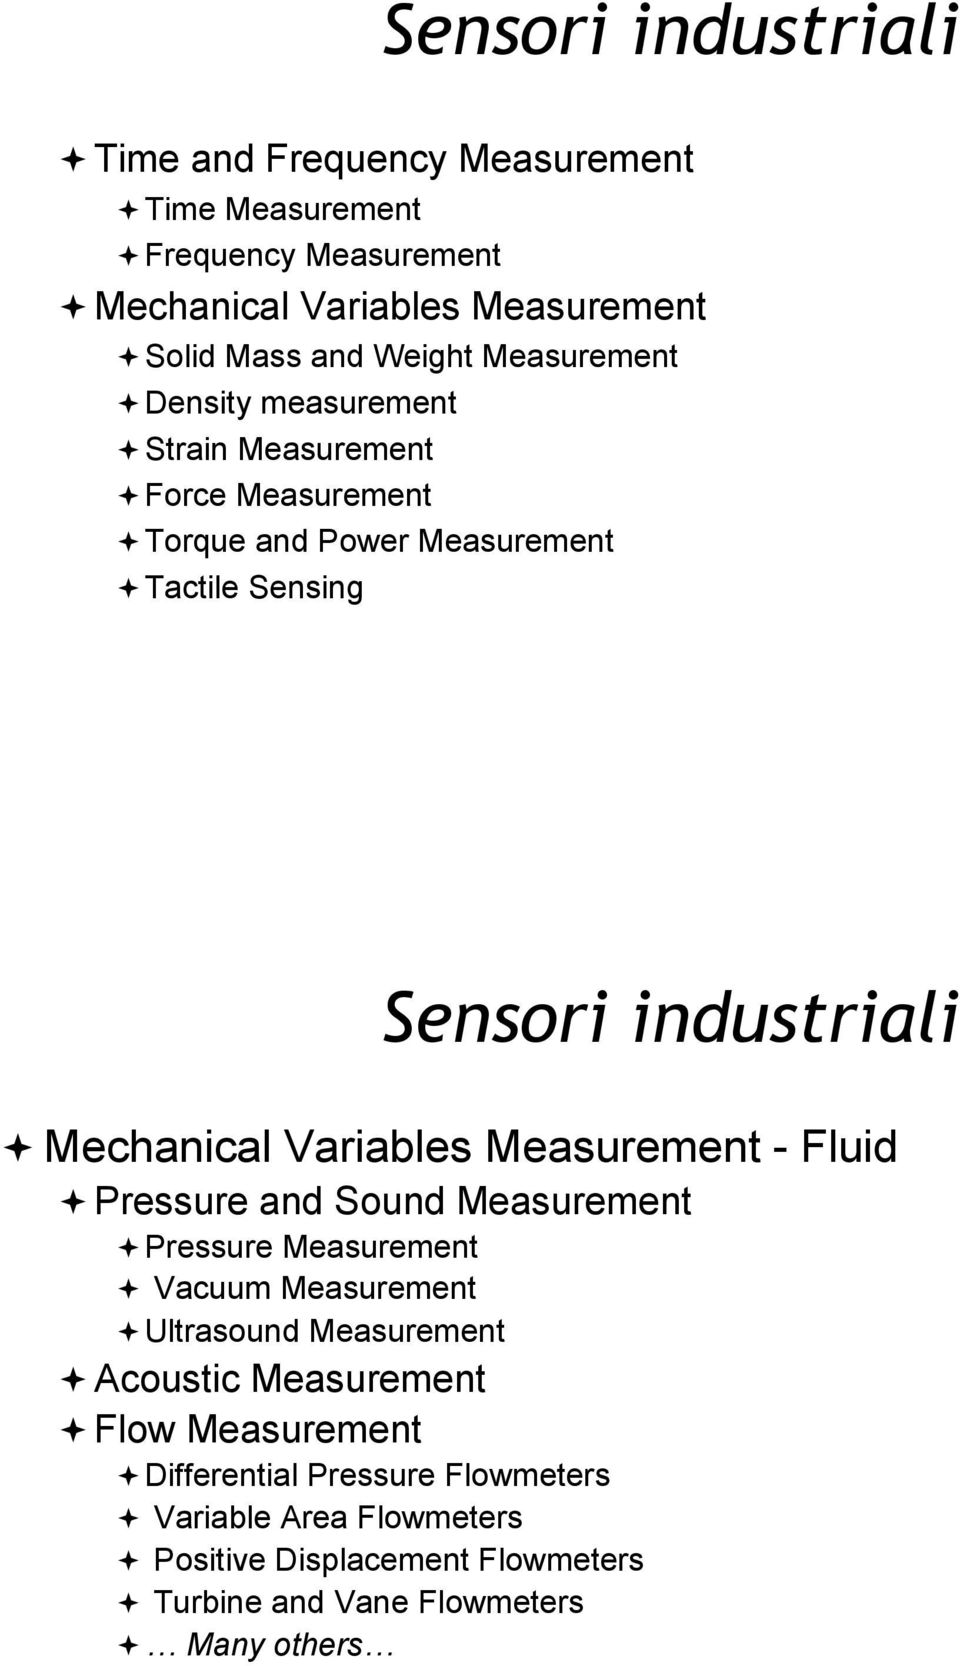 Tactile Sensing Sensori industriali! Mechanical Variables Measurement - Fluid! Pressure and Sound Measurement! Pressure Measurement!